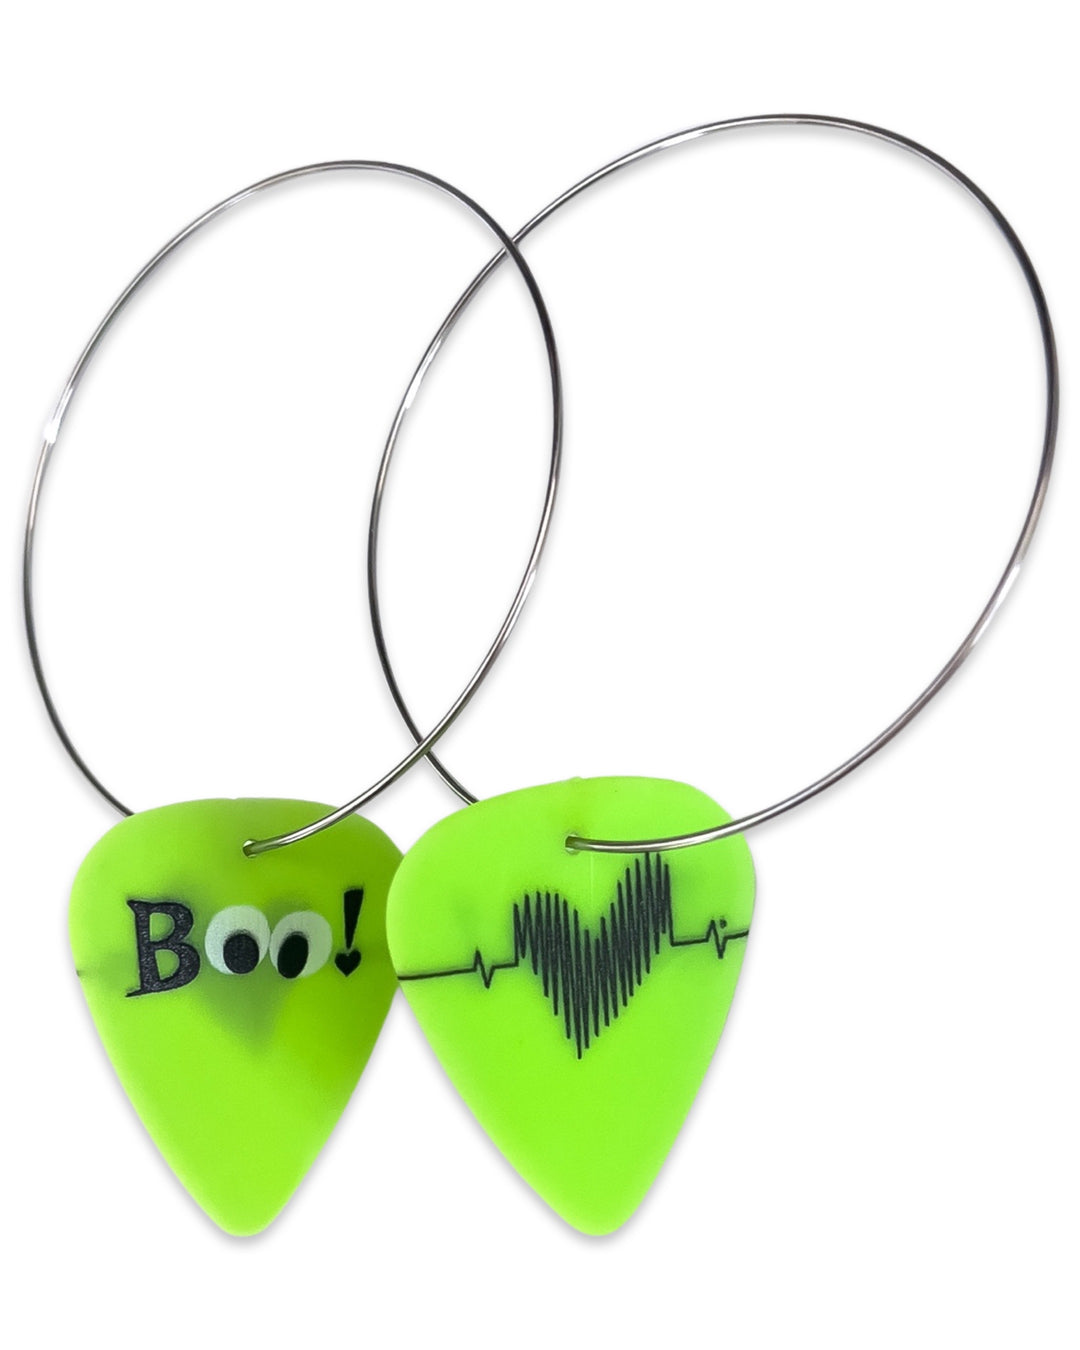 BOO! Neon Green Guitar Pick Earrings